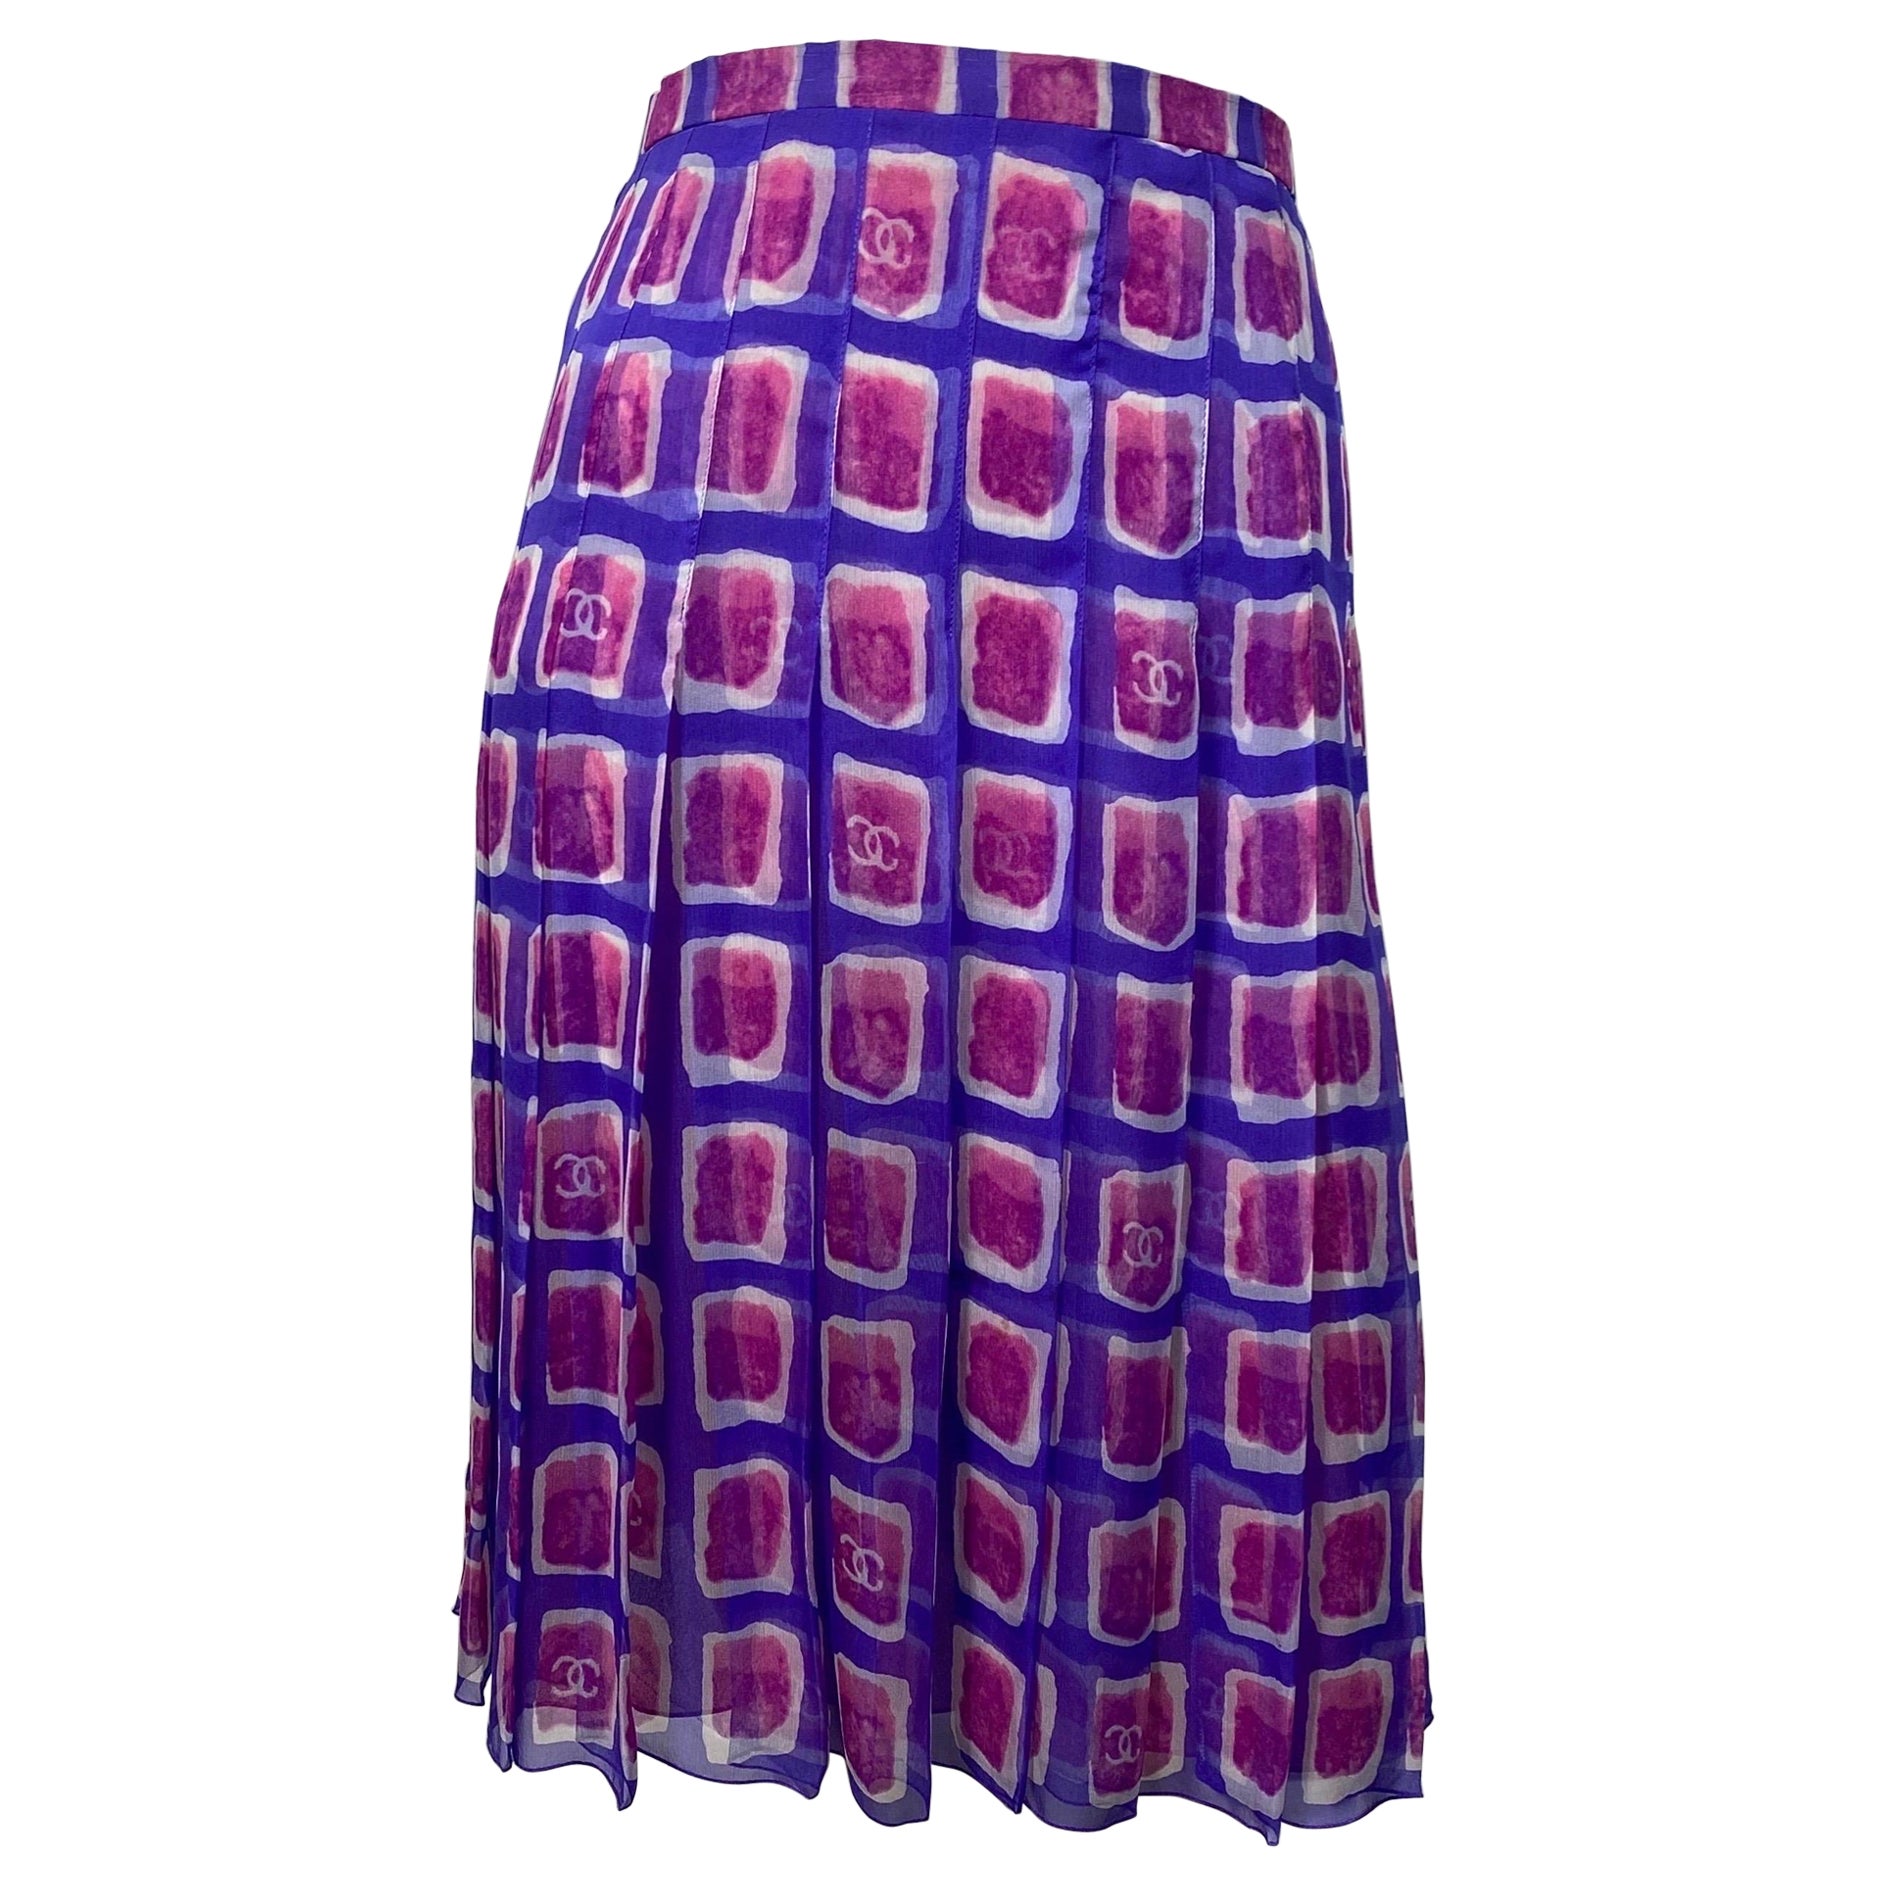 Chanel 2001 Purple and Fuchsia Silk Print Skirt - Size 40